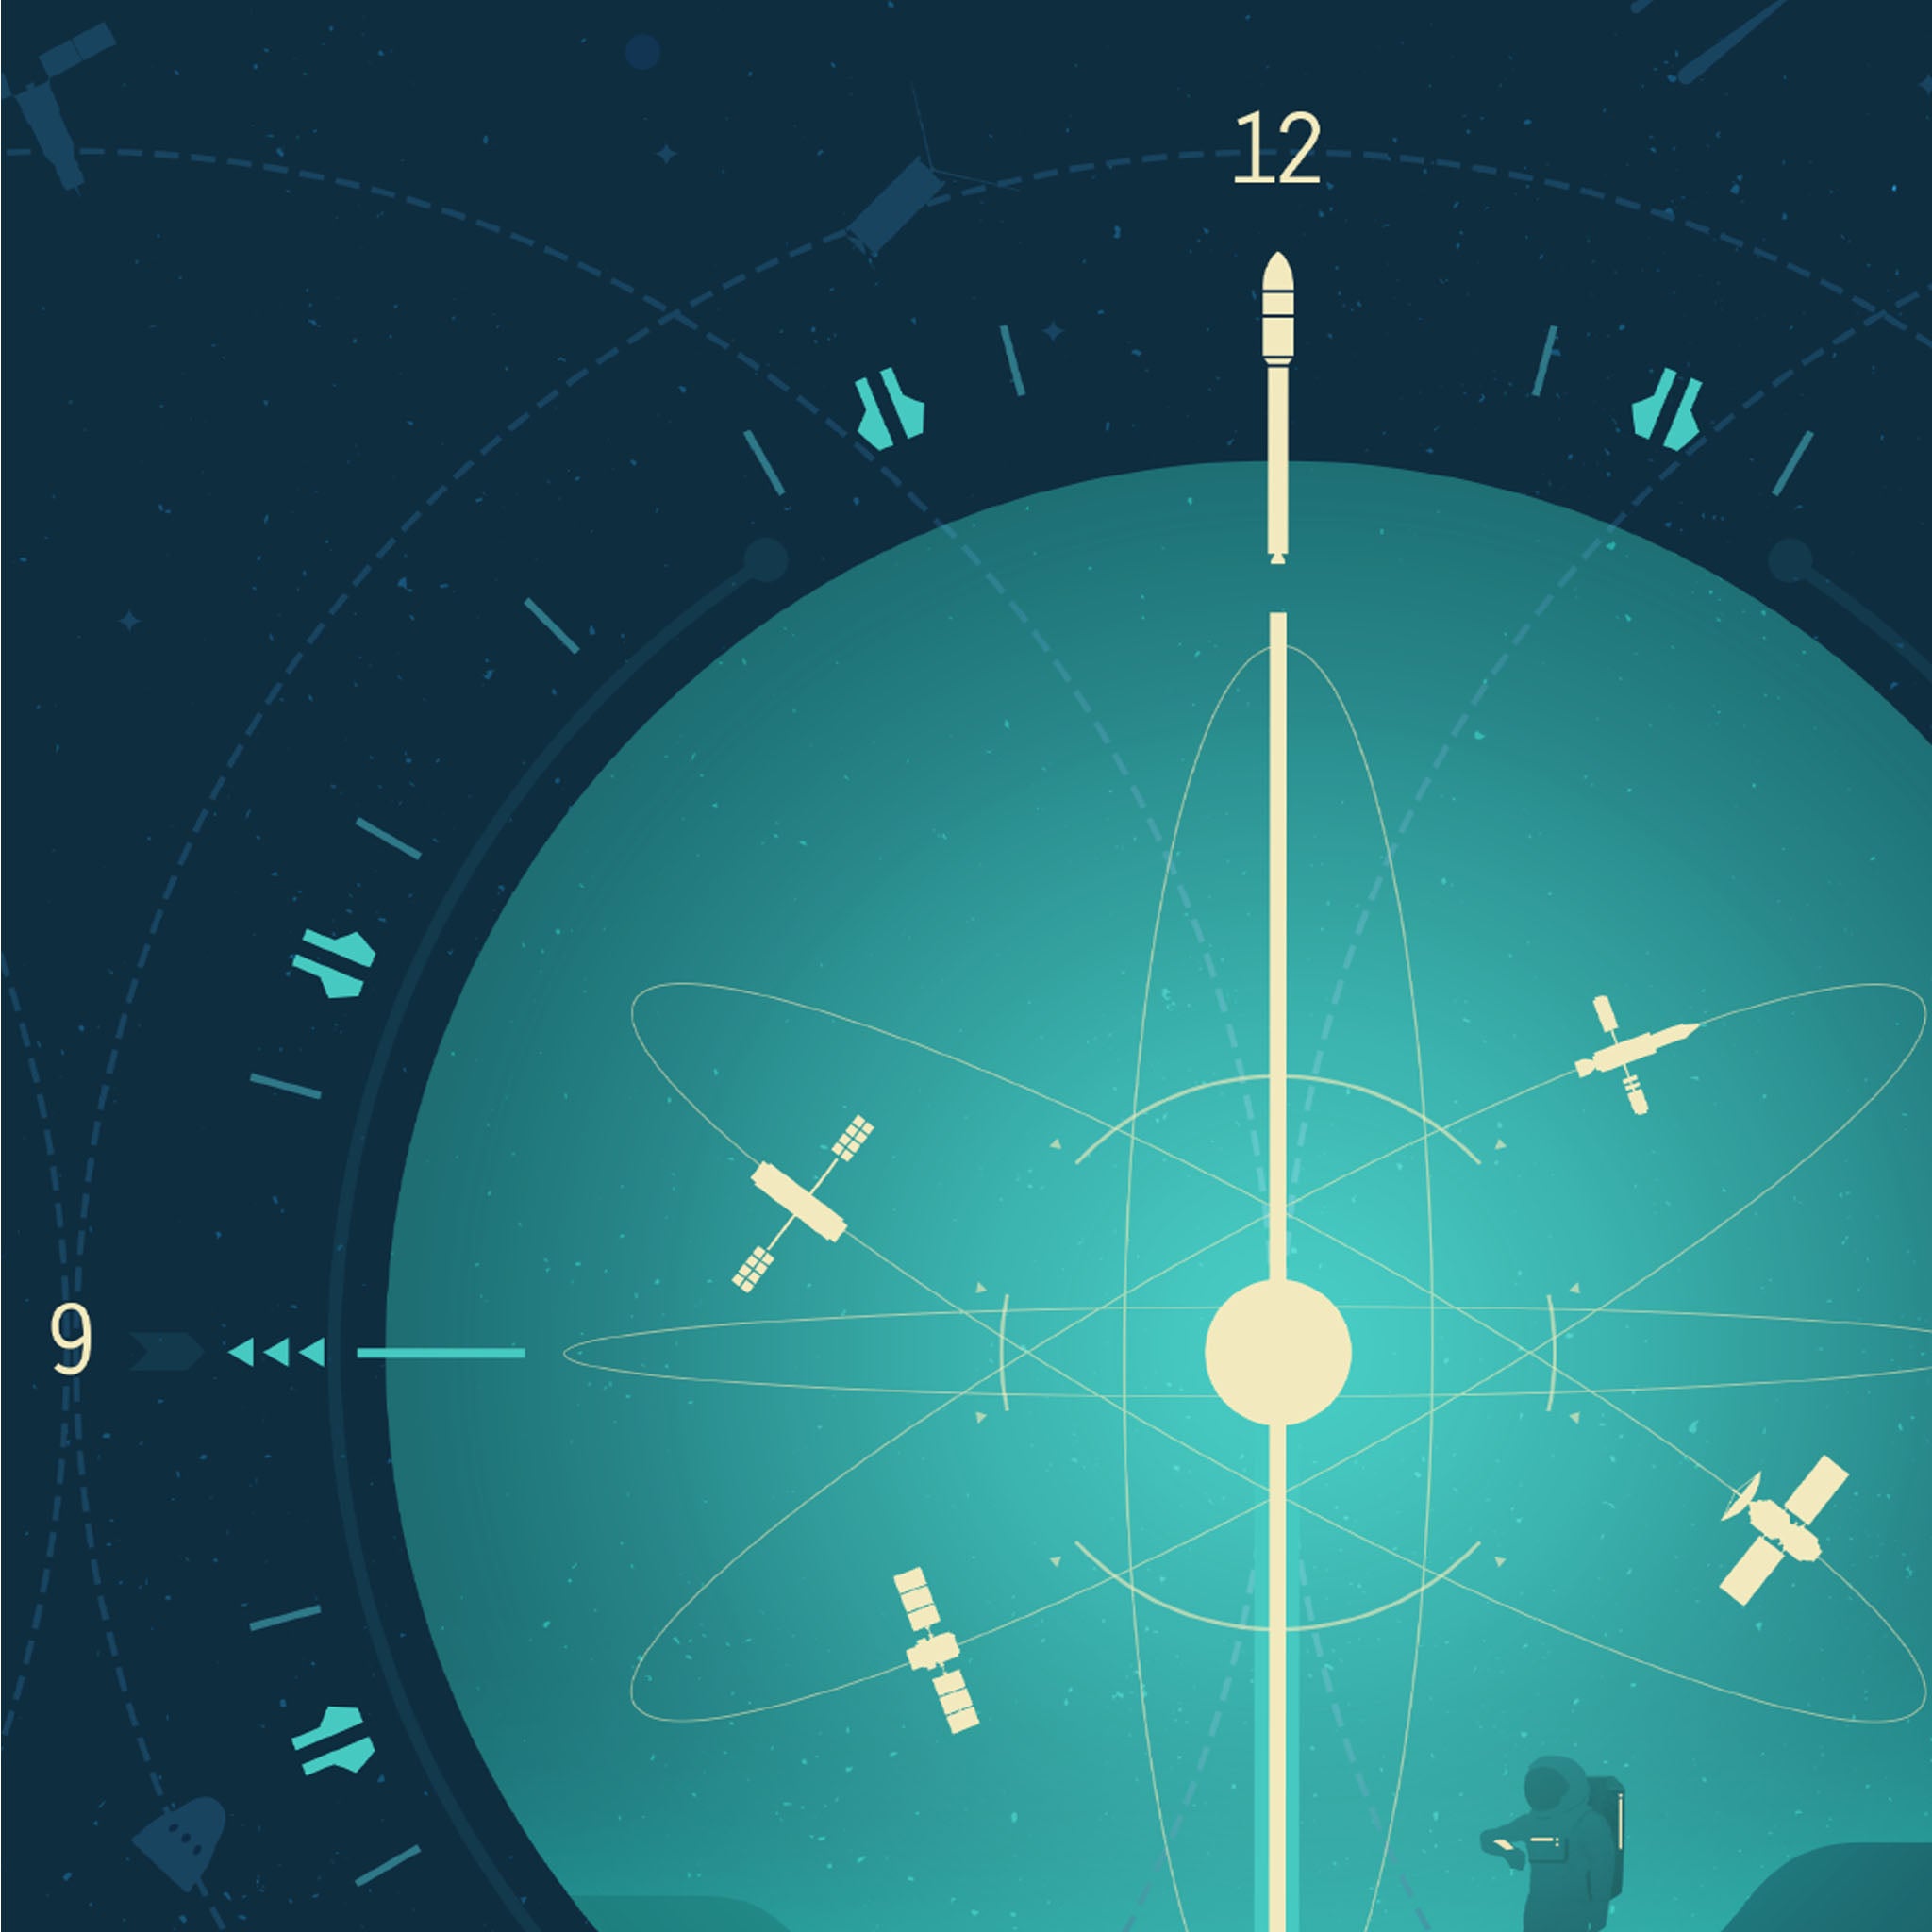 Atomic Clock Blue -  Plakat NASA